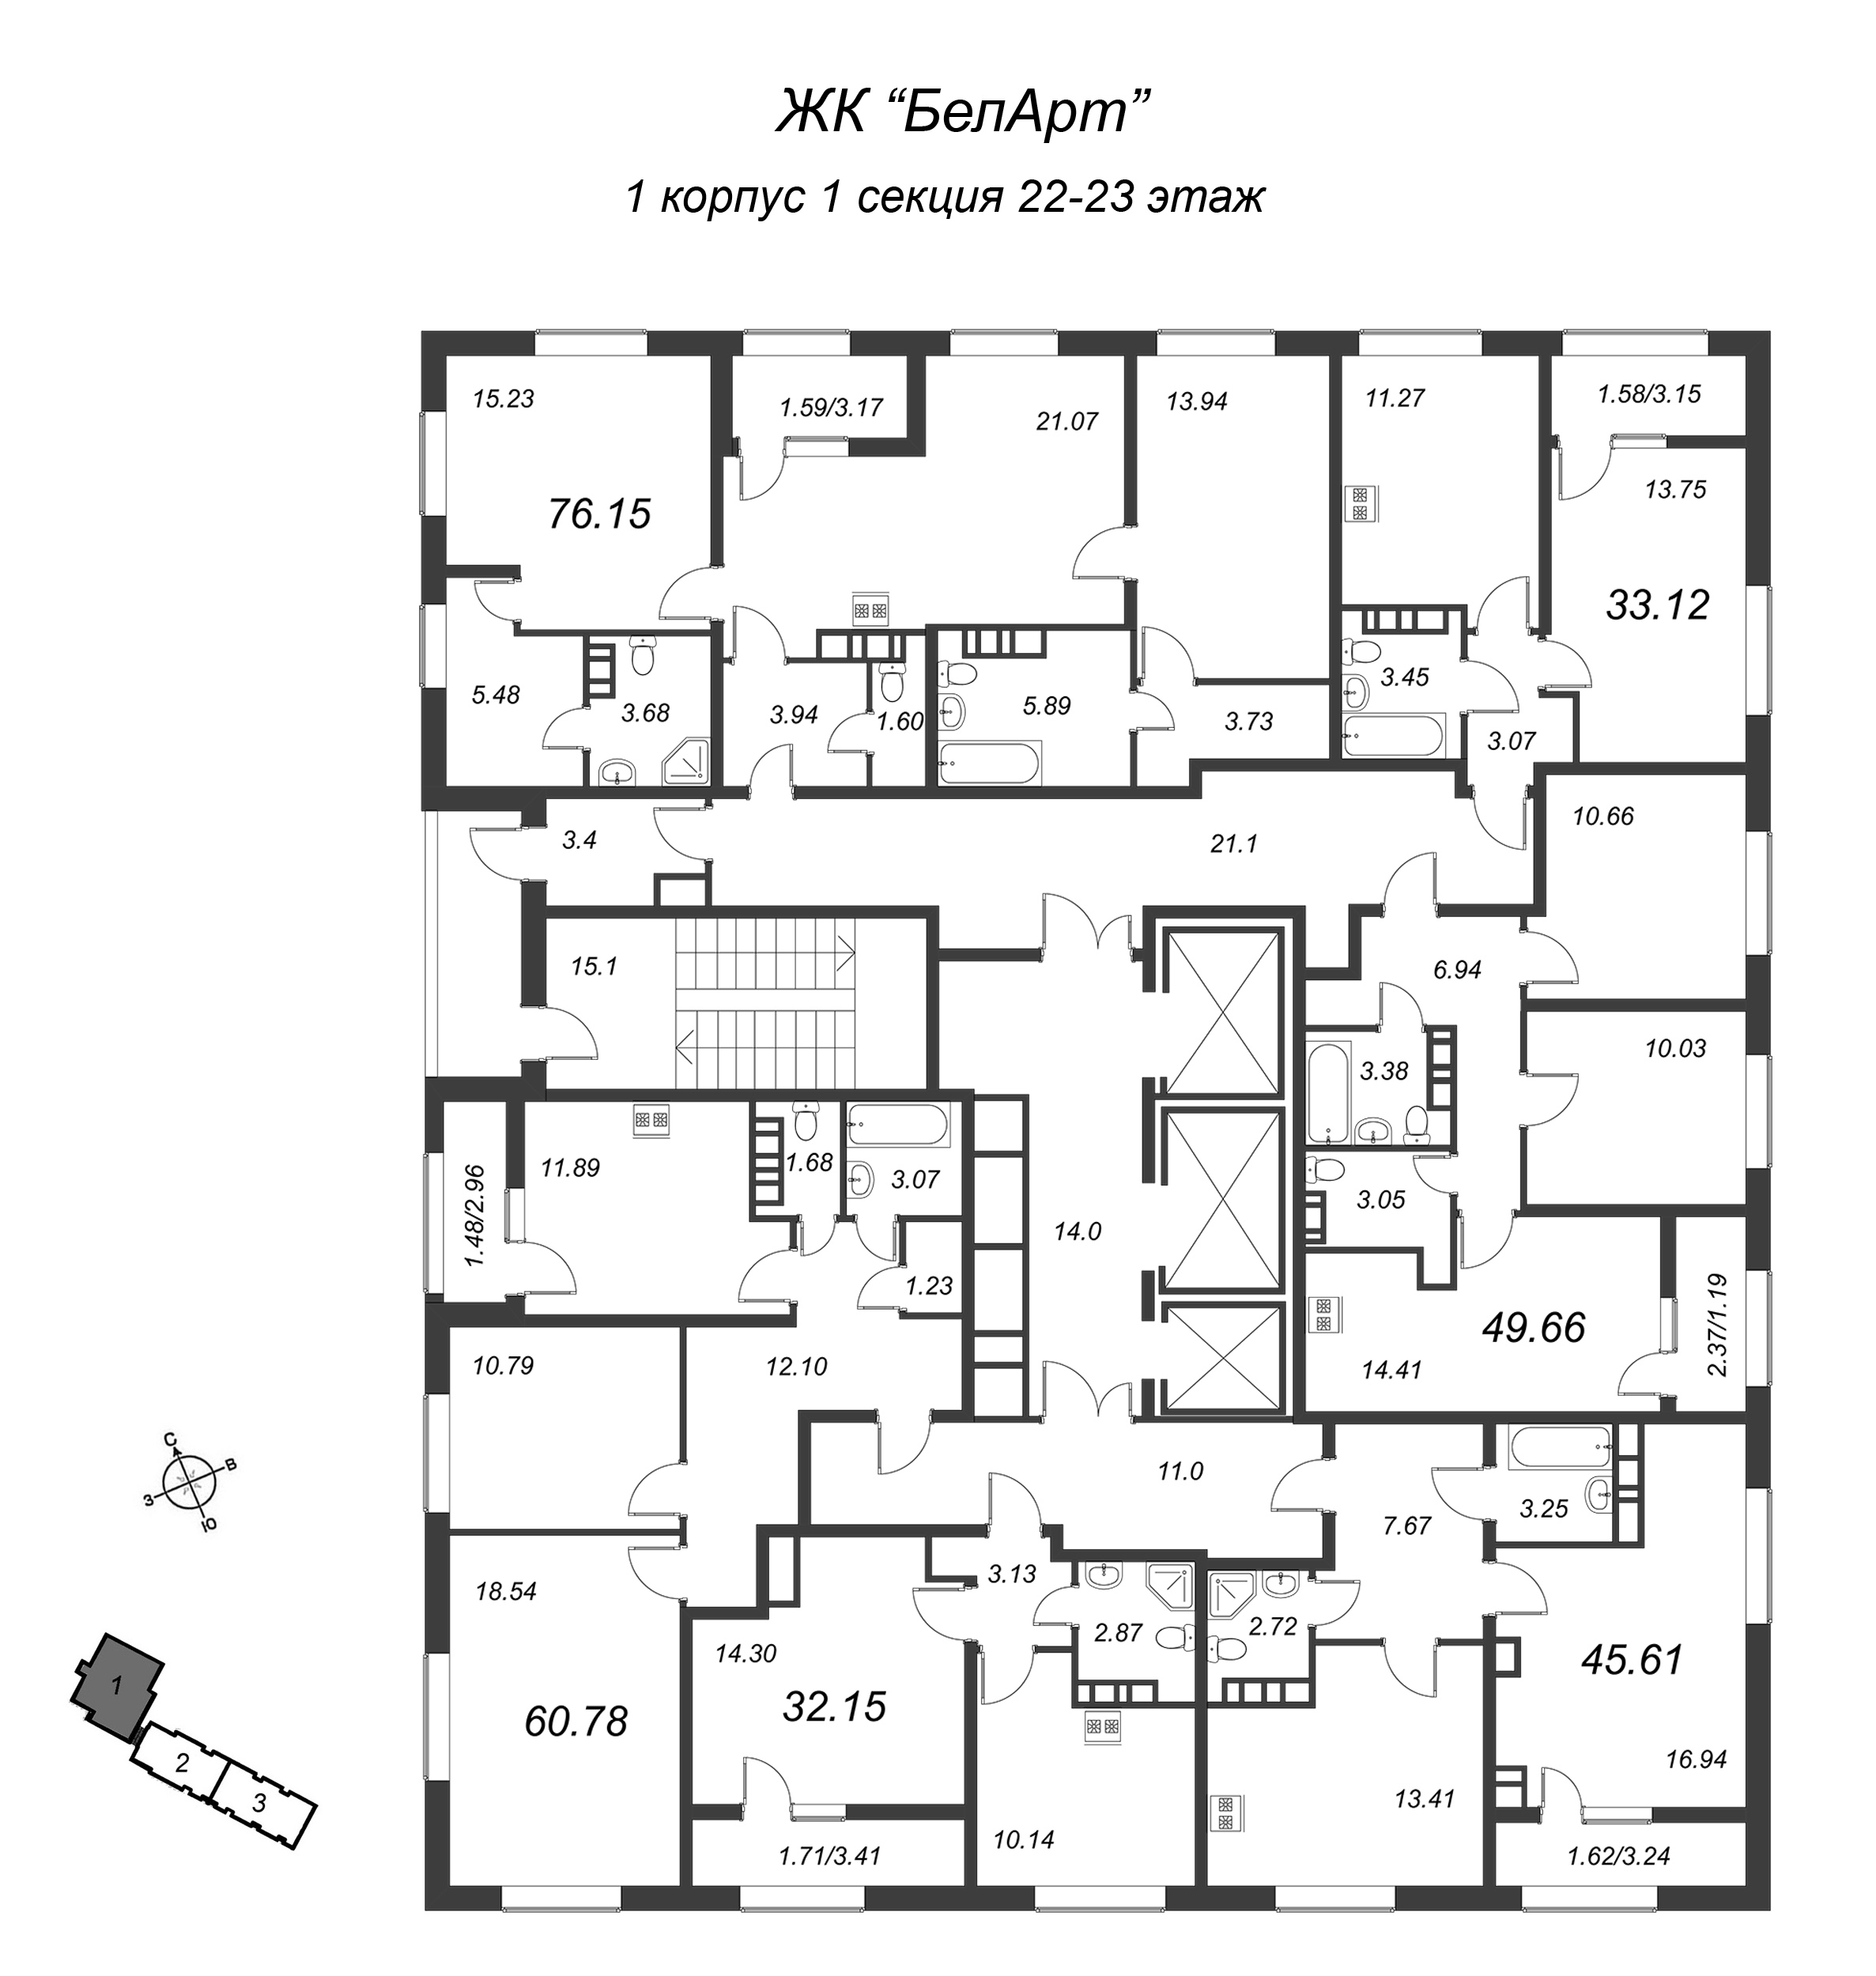 3-комнатная (Евро) квартира, 76.5 м² - планировка этажа